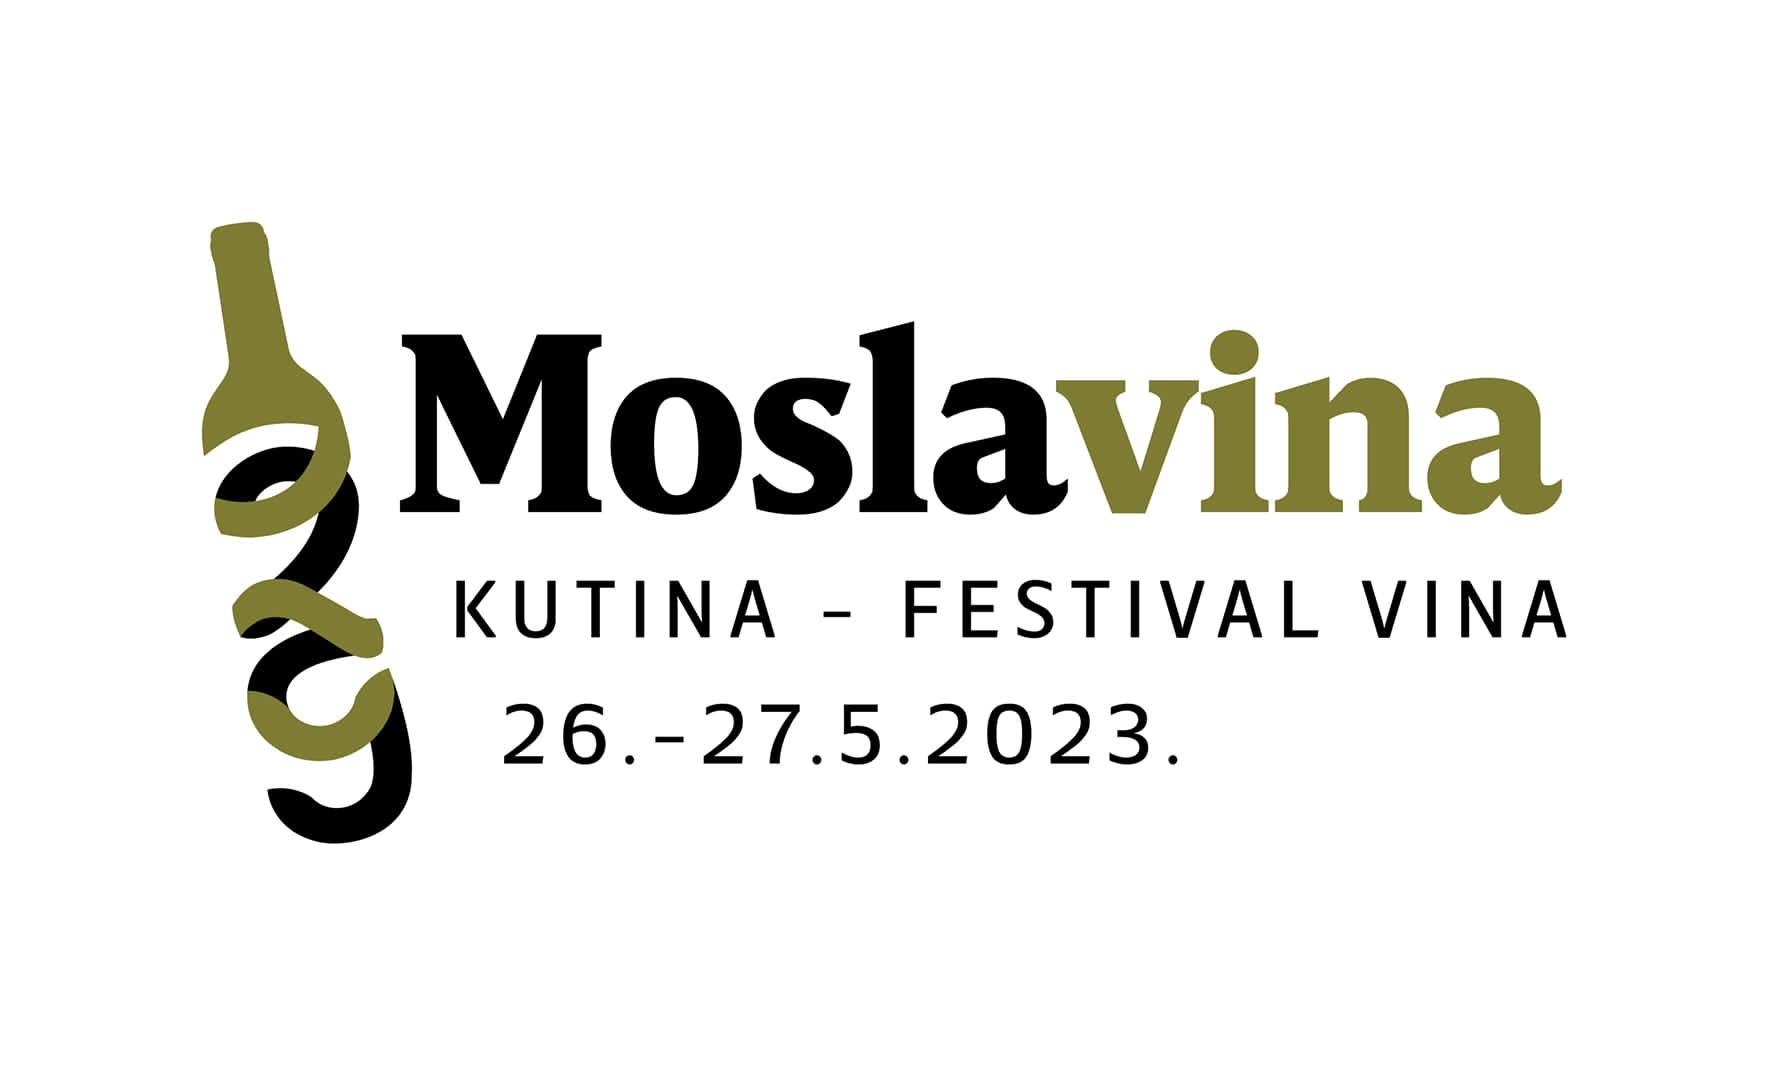 MoslaVINA - Kutina 2023.